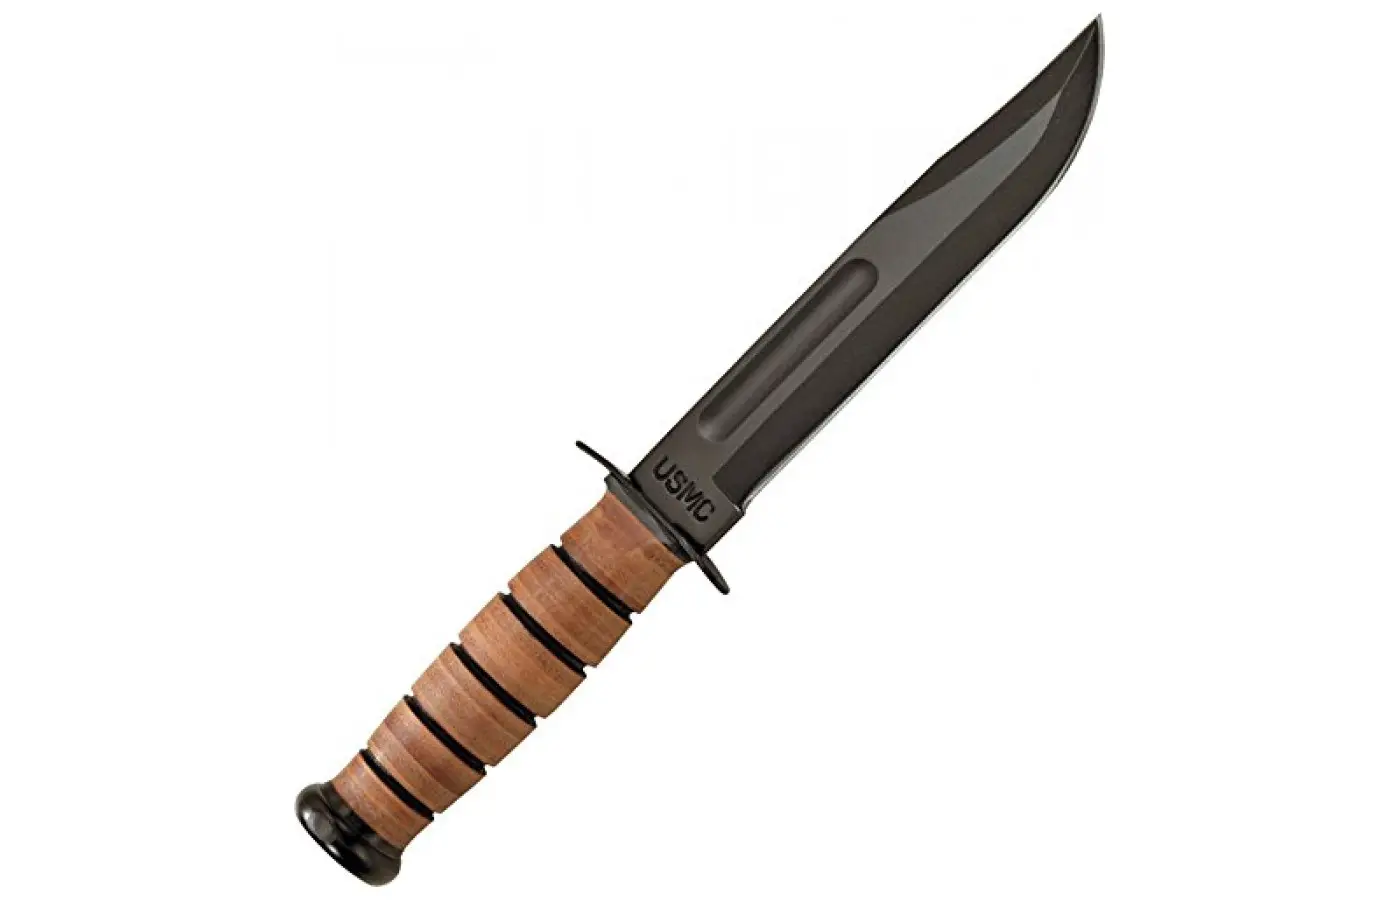 The Ka-Bar USMC is a 7-inch full tang survival knife.